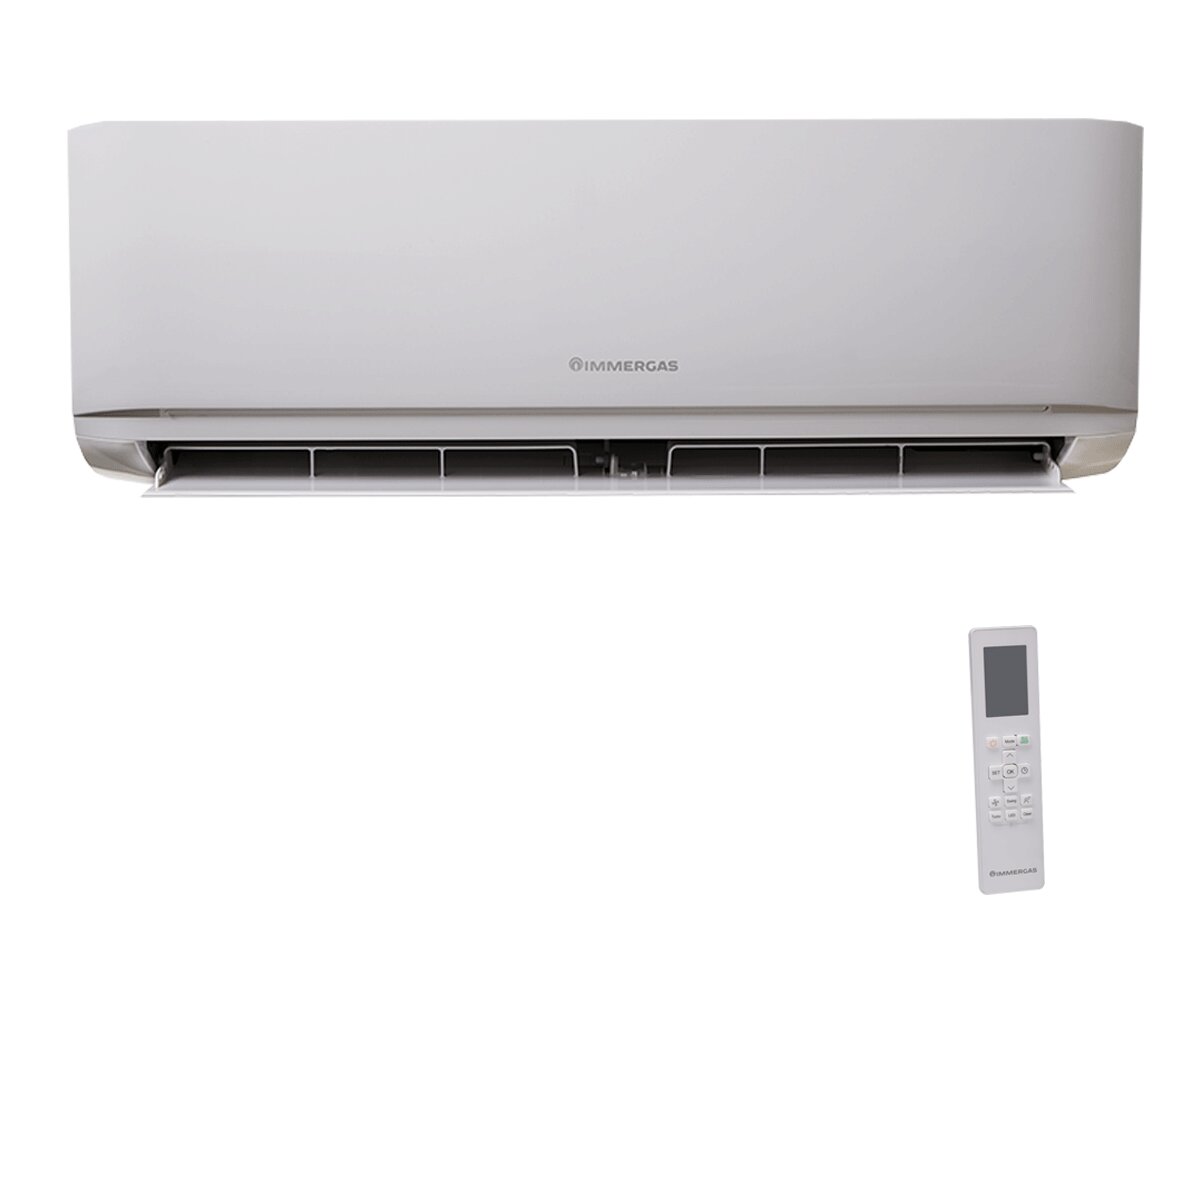 Immergas THOR 18000 BTU R32 Inverter Air Conditioner A++/A+